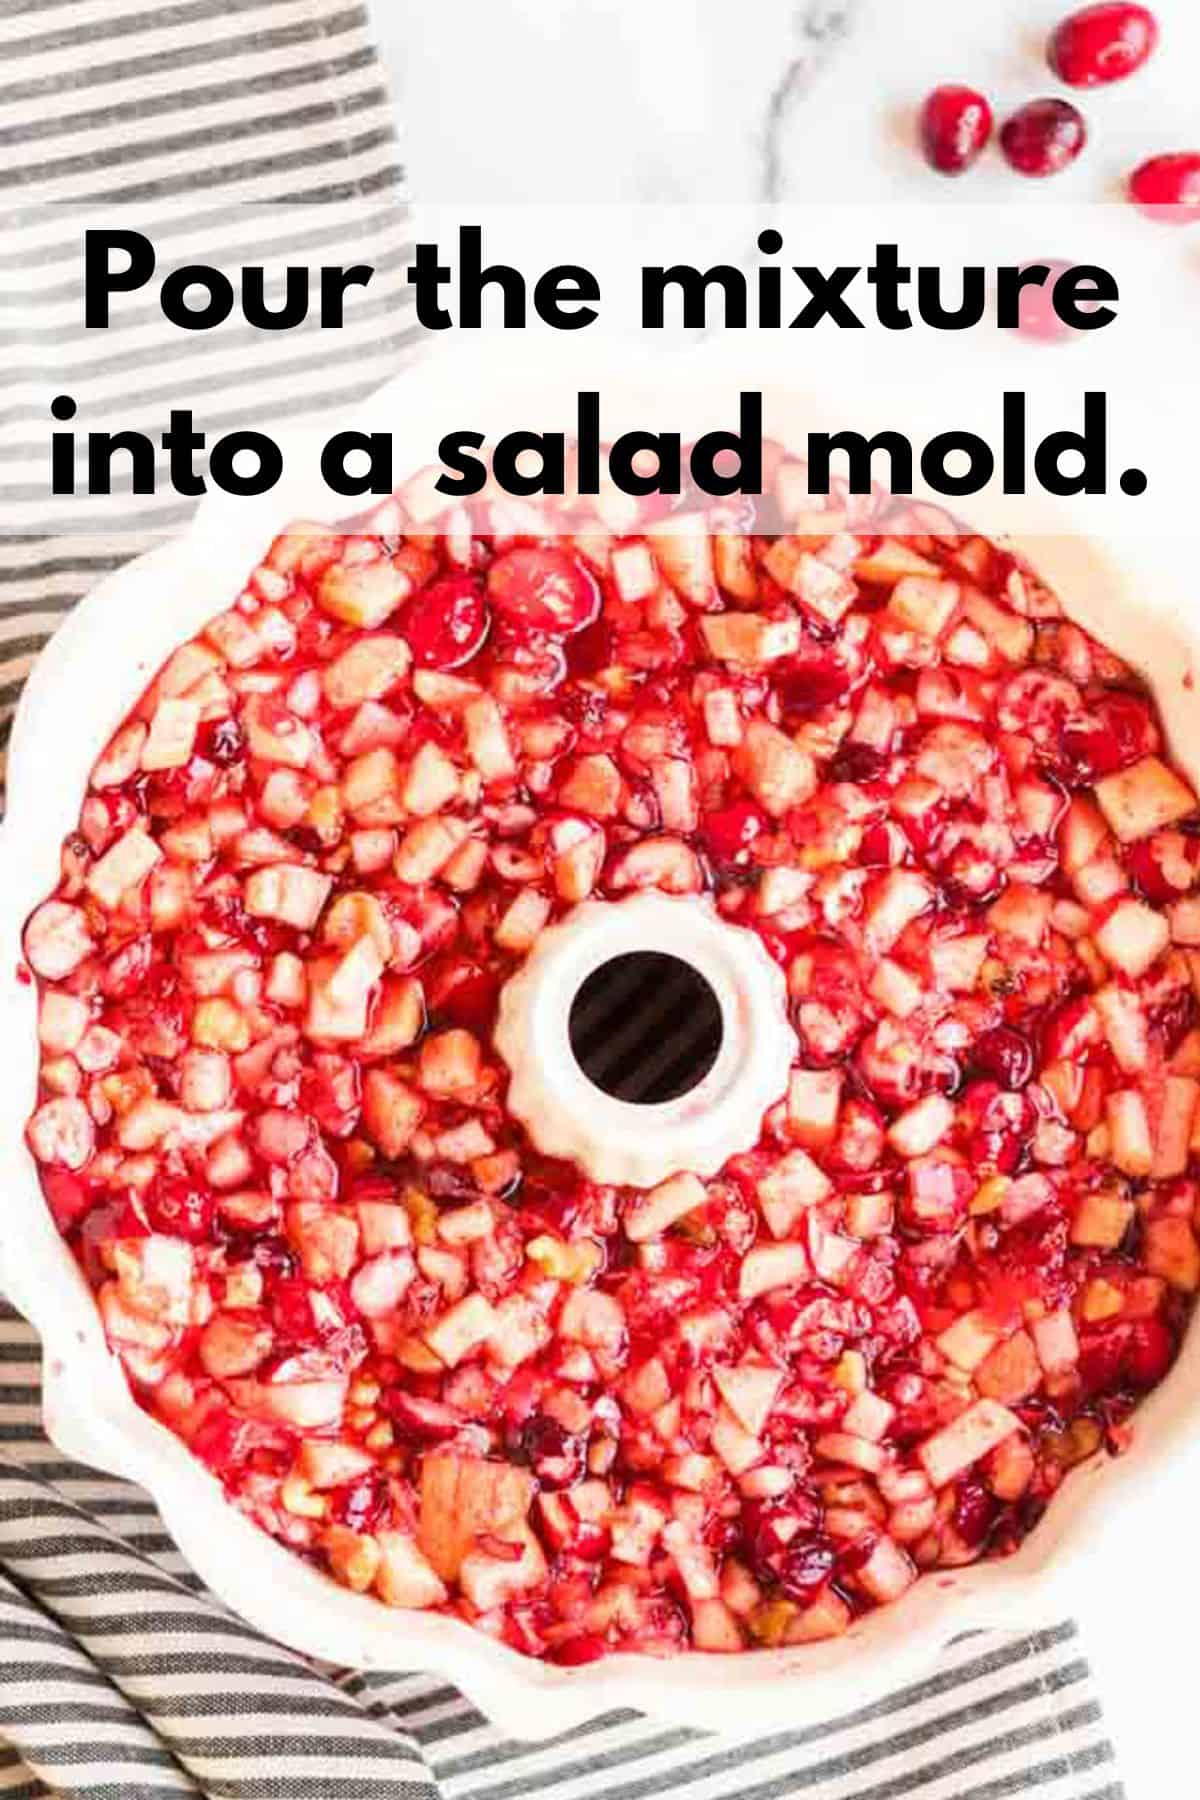 Cranberry salad in a salad mold.